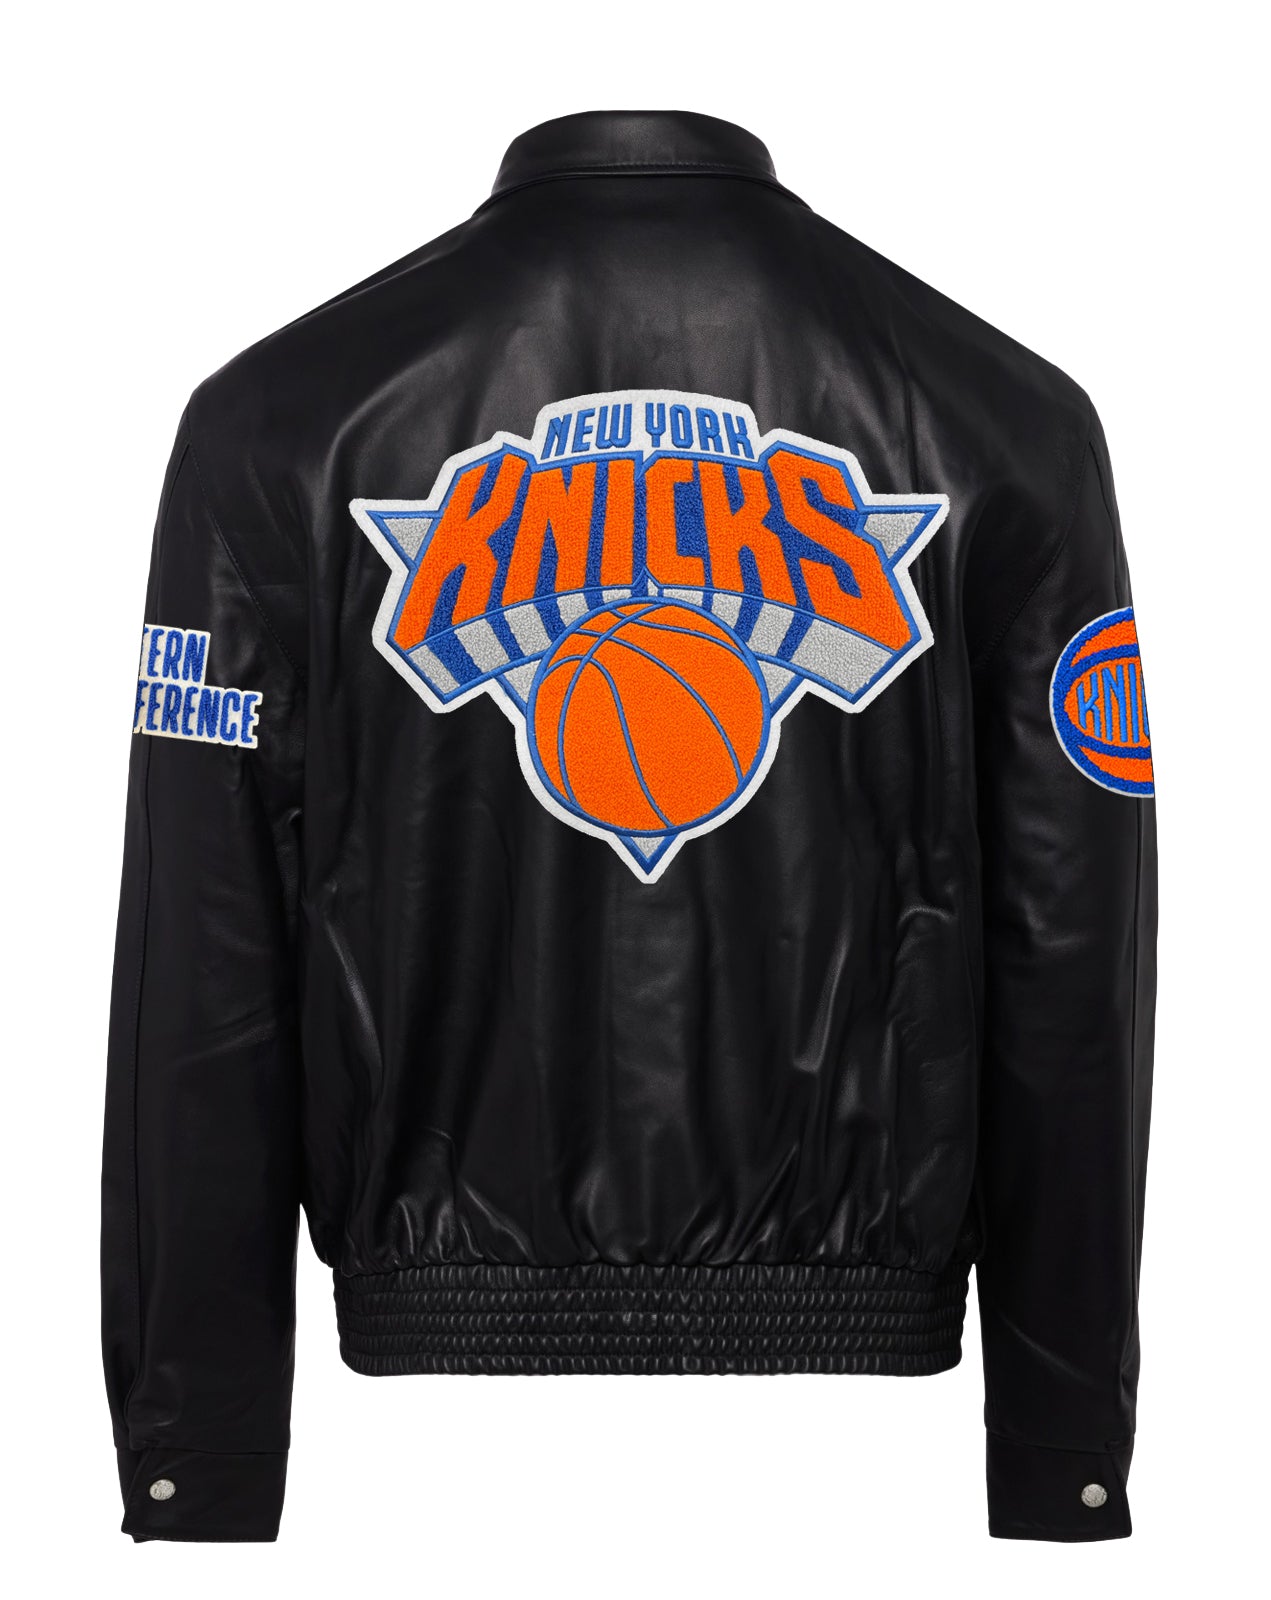 Maker of Jacket Black Leather Jackets NBA Jeff Hamilton New York Knicks